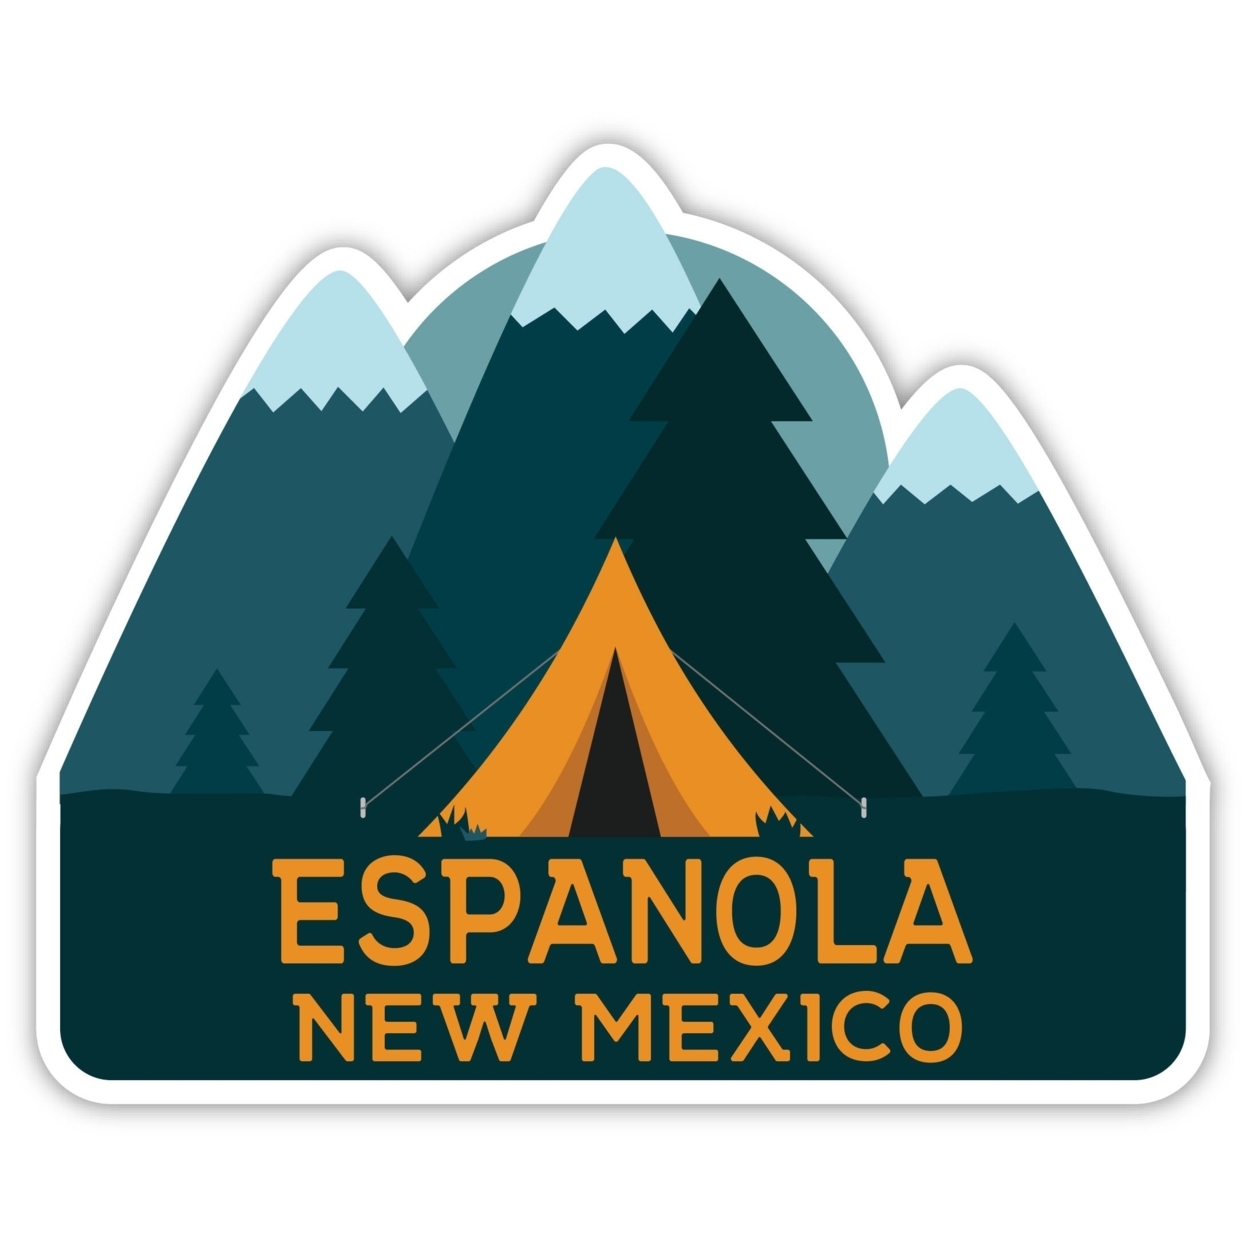 Espanola New Mexico Souvenir Decorative Stickers (Choose Theme And Size) - Single Unit, 6-Inch, Tent